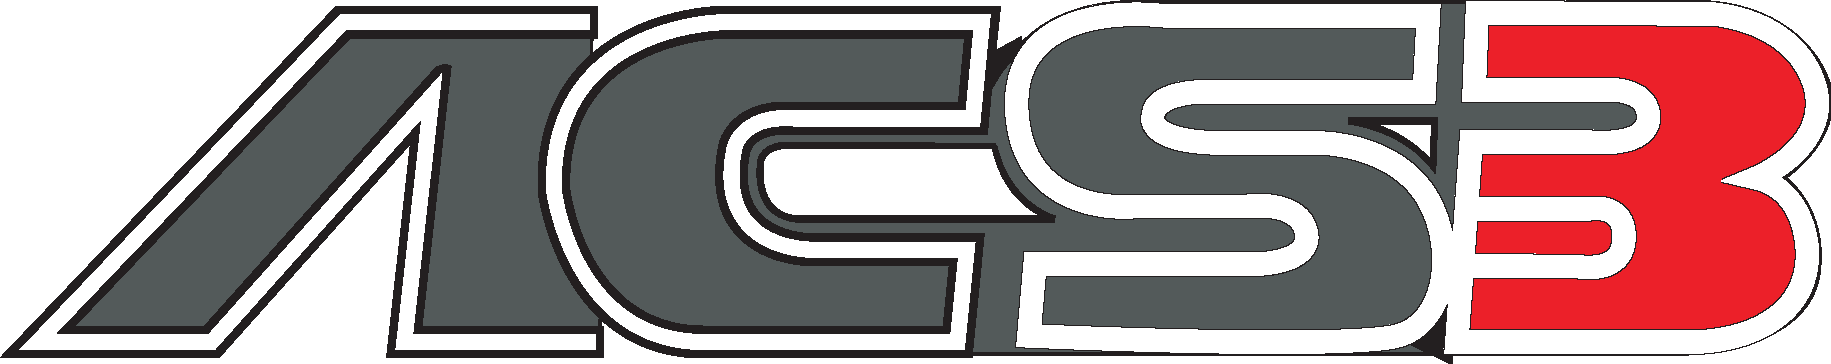 Acs3 Logo Vector - (.Ai .PNG .SVG .EPS Free Download)